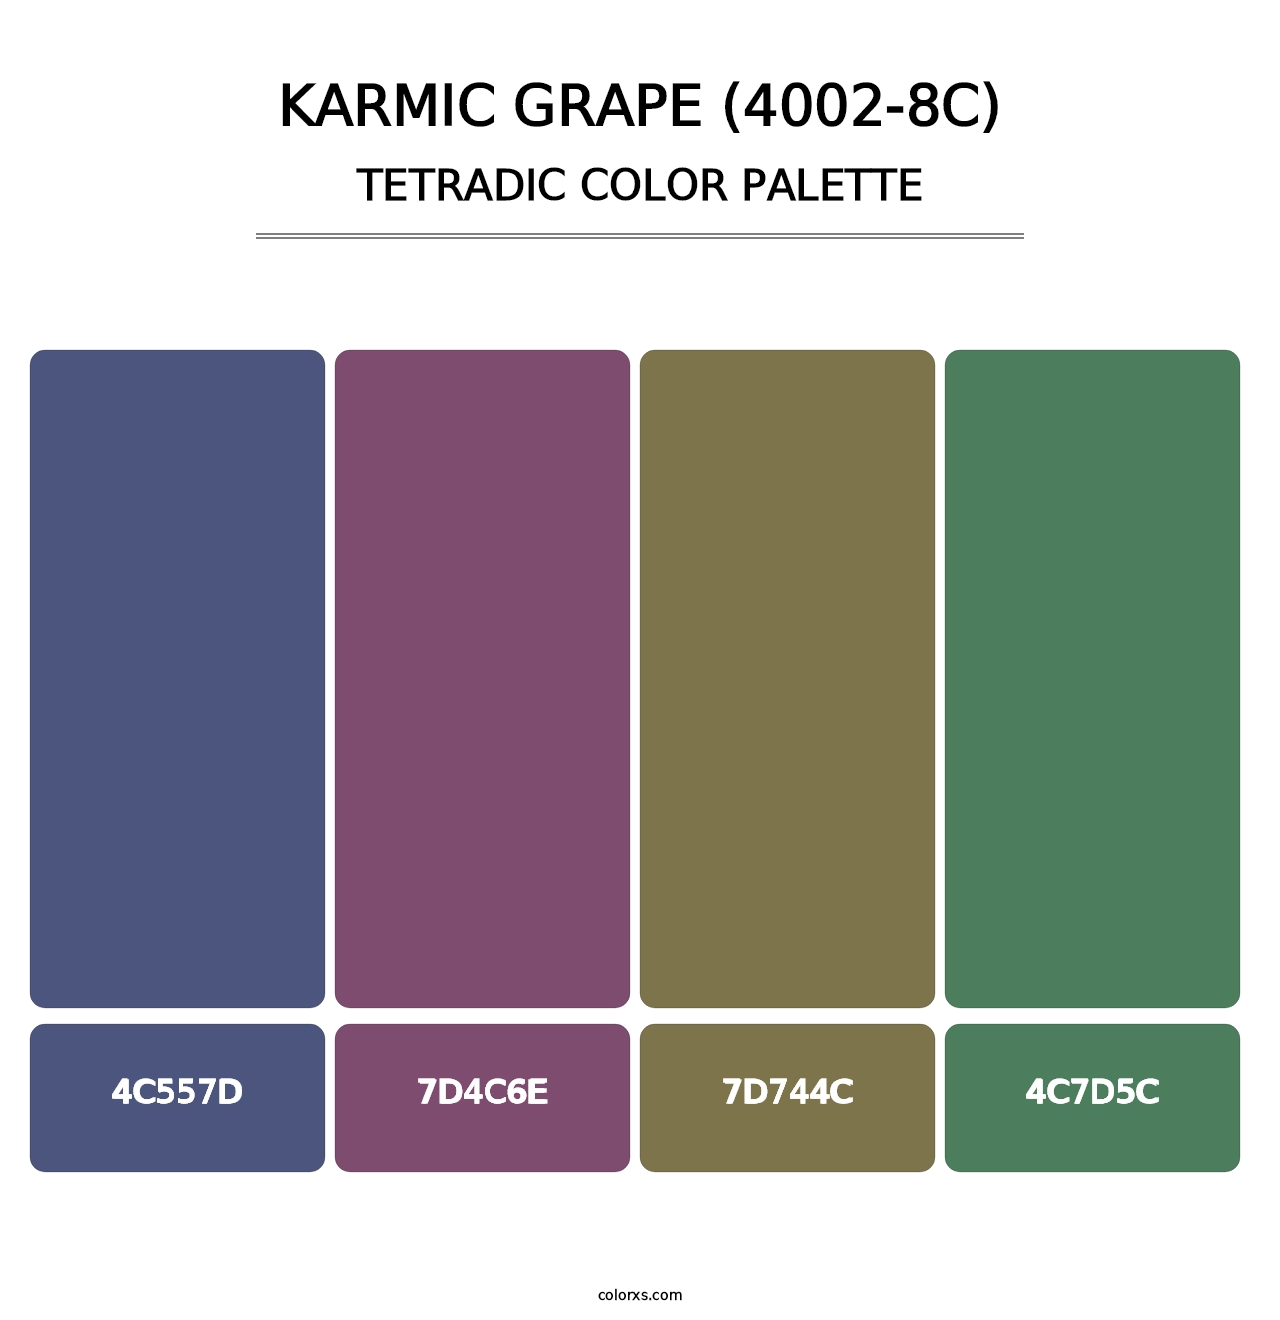 Karmic Grape (4002-8C) - Tetradic Color Palette